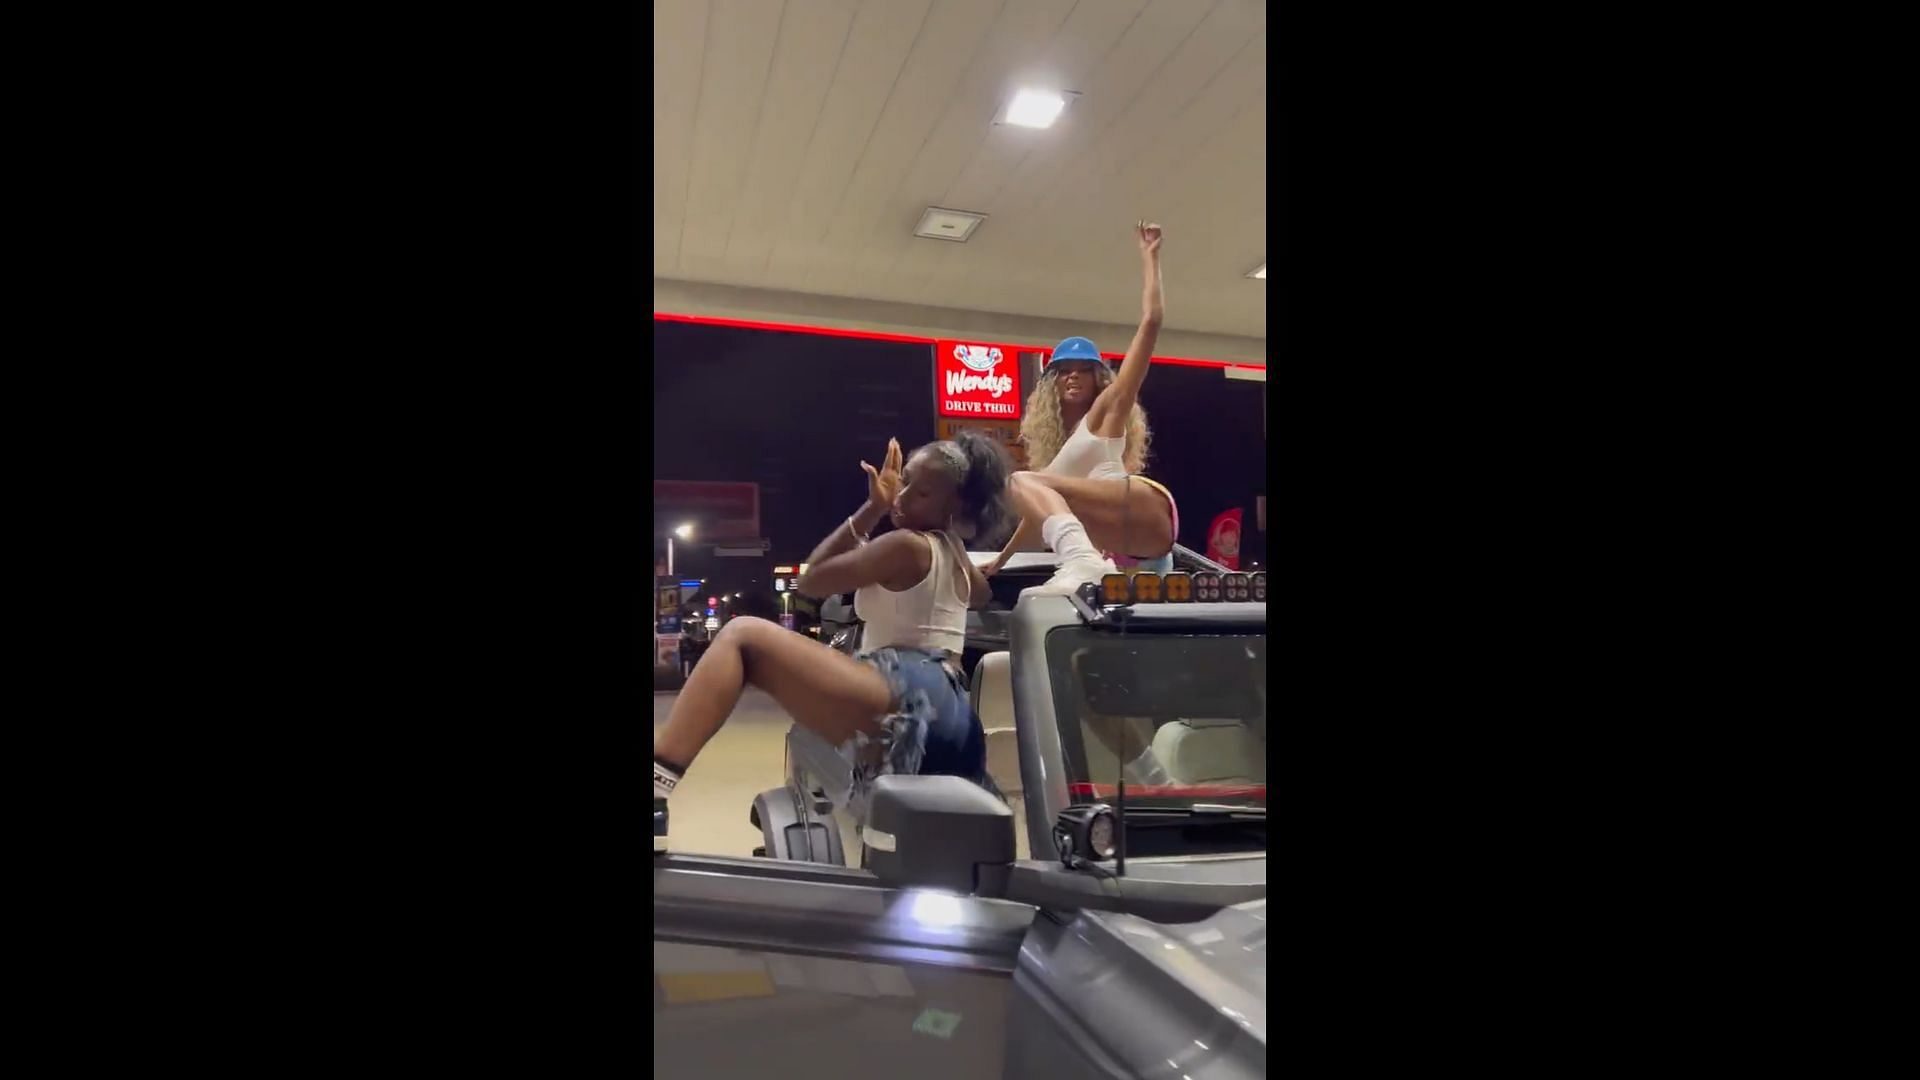 Ciara twerking on a car at a gas station